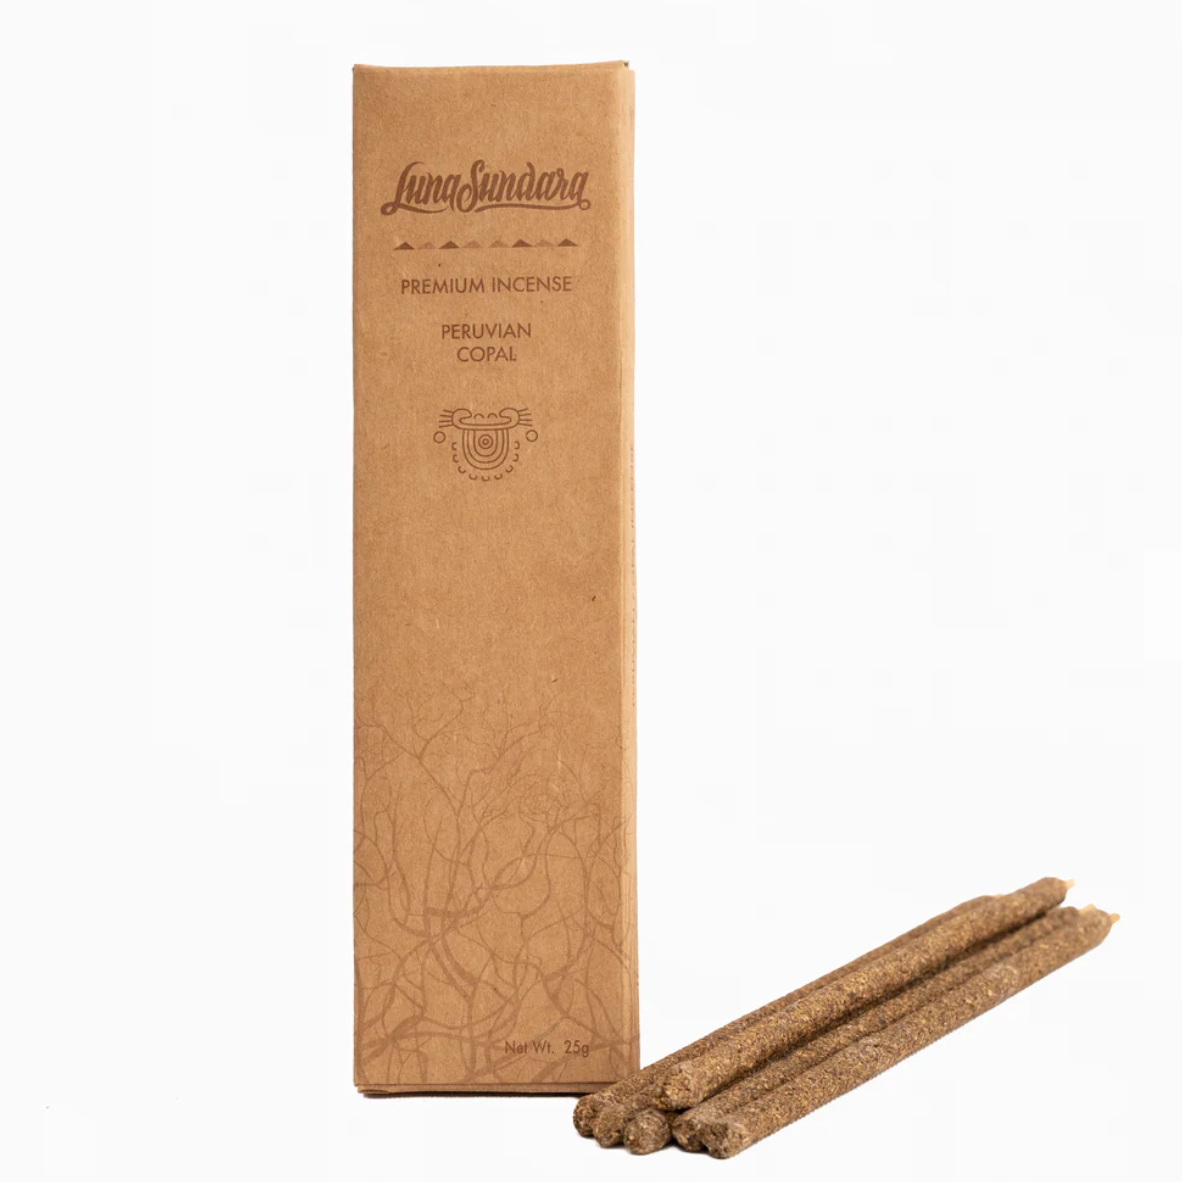 Premium Grey Copal Hand Rolled Incense Sticks from 100% Wild Peruvian Copal